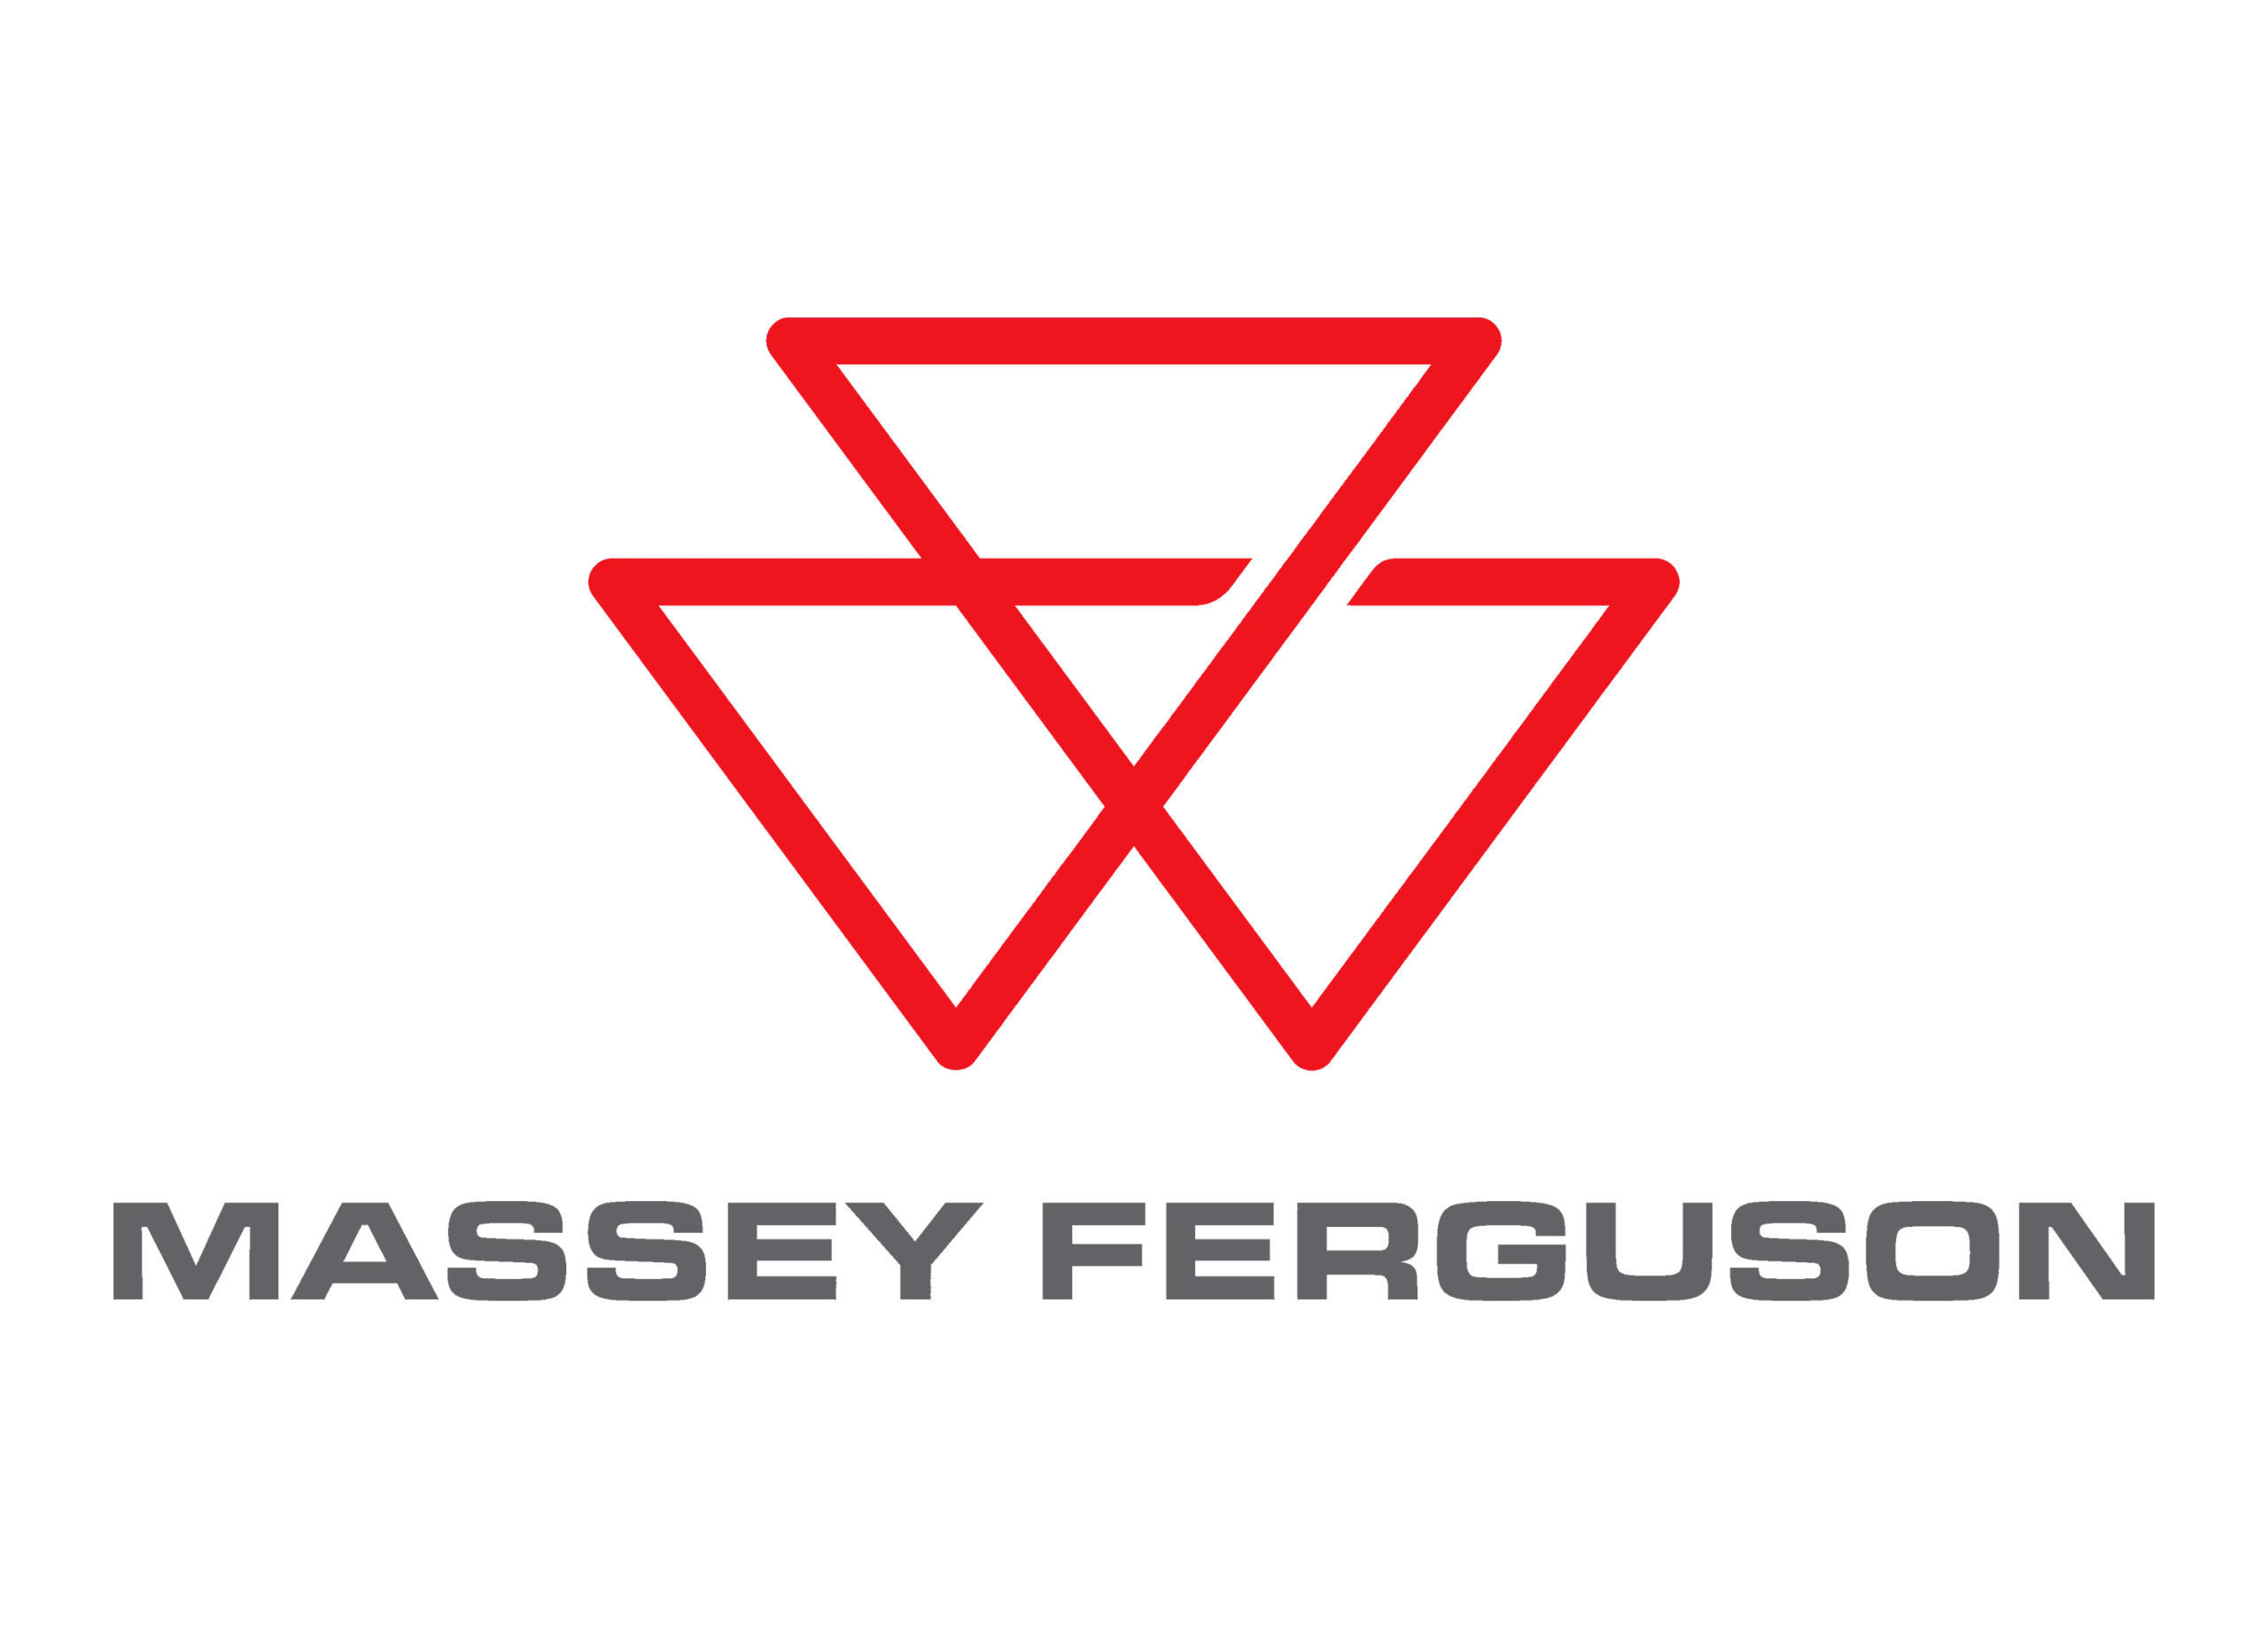 Massey Ferguson logo 2022-present